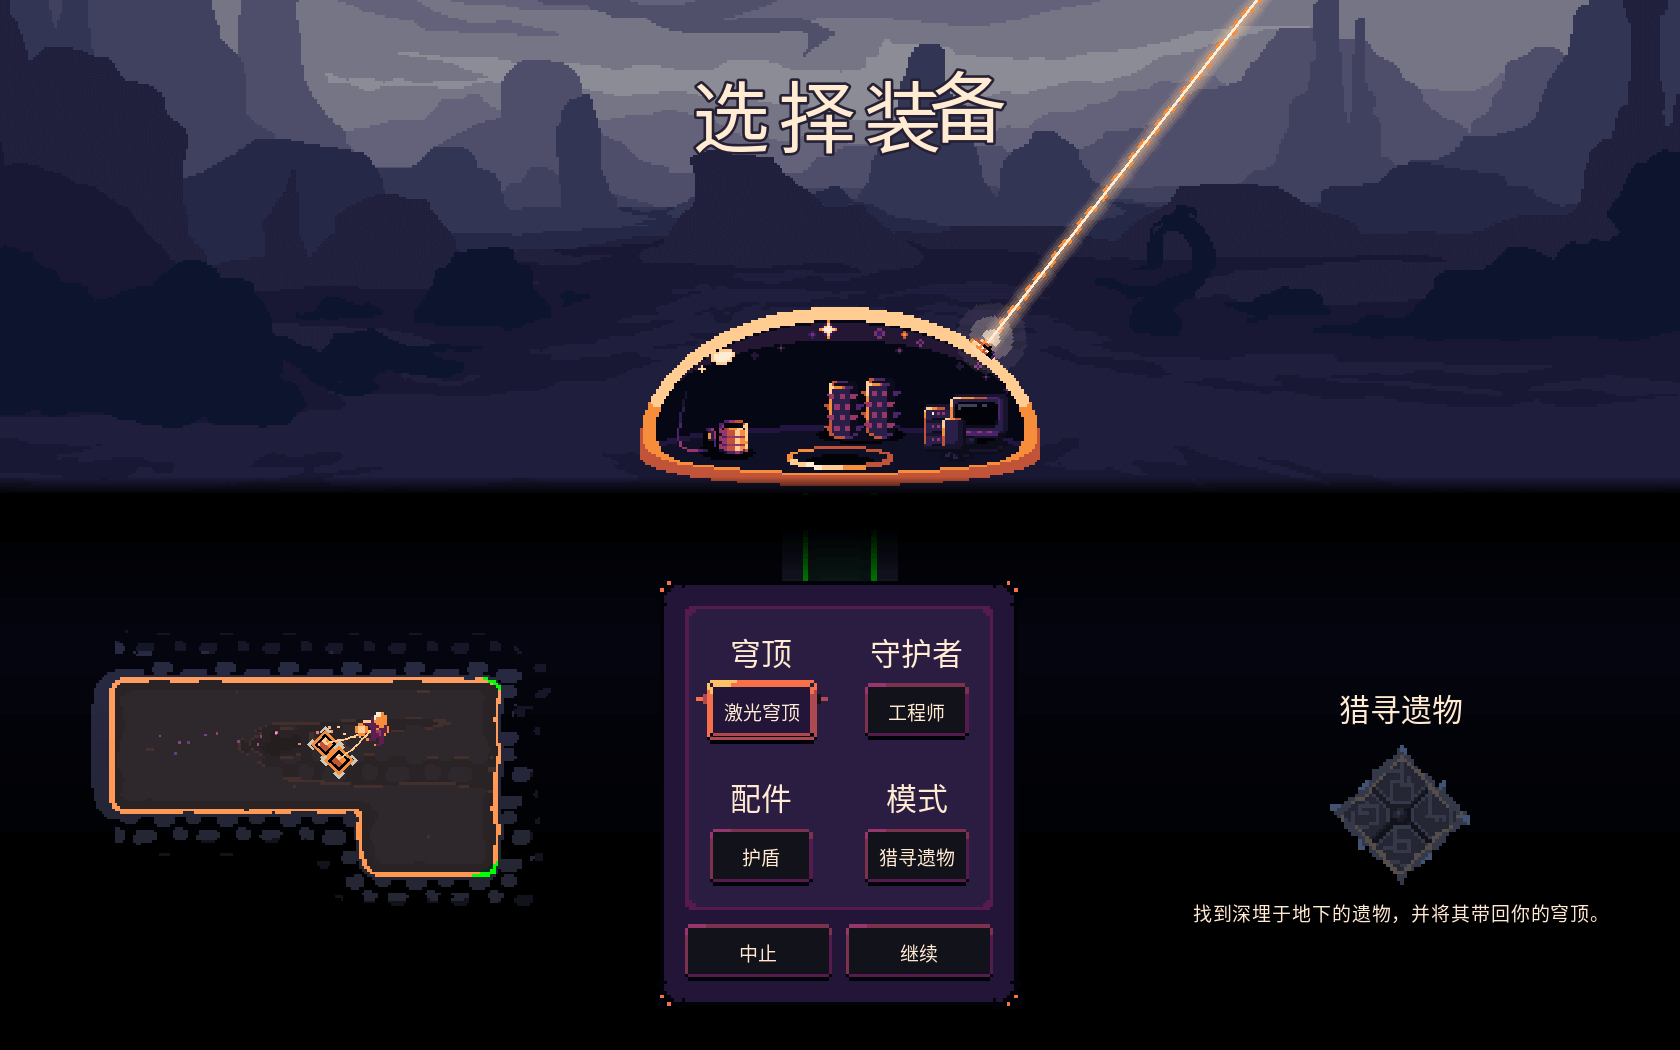 穹顶守护者 for Mac Dome Keeper v3.2 中文原生版 苹果电脑